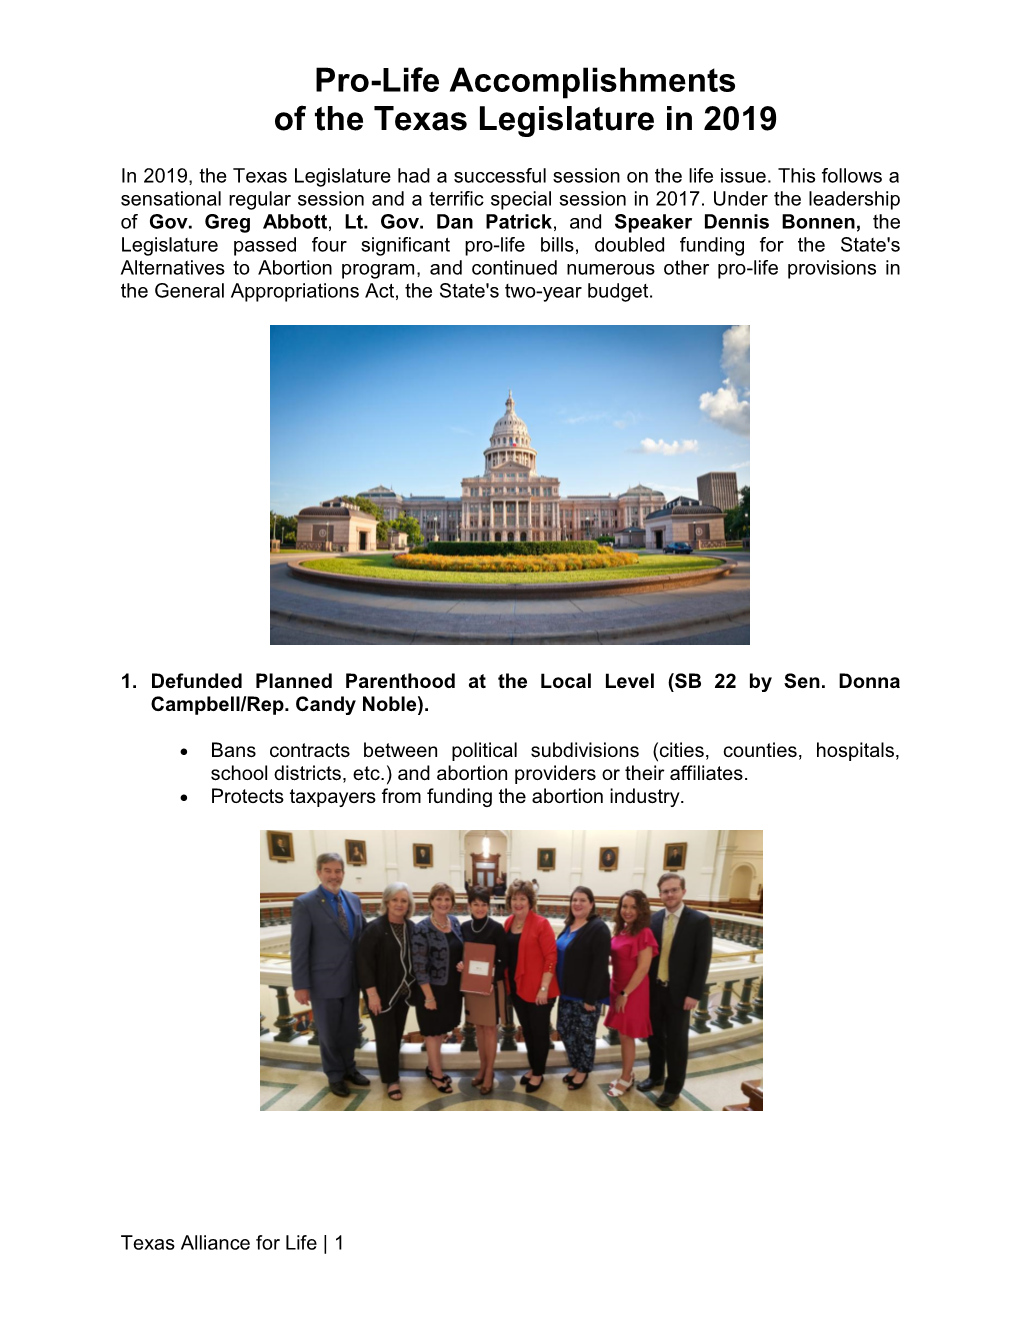 Pro-Life Accomplishments of the Texas Legislature in 2019